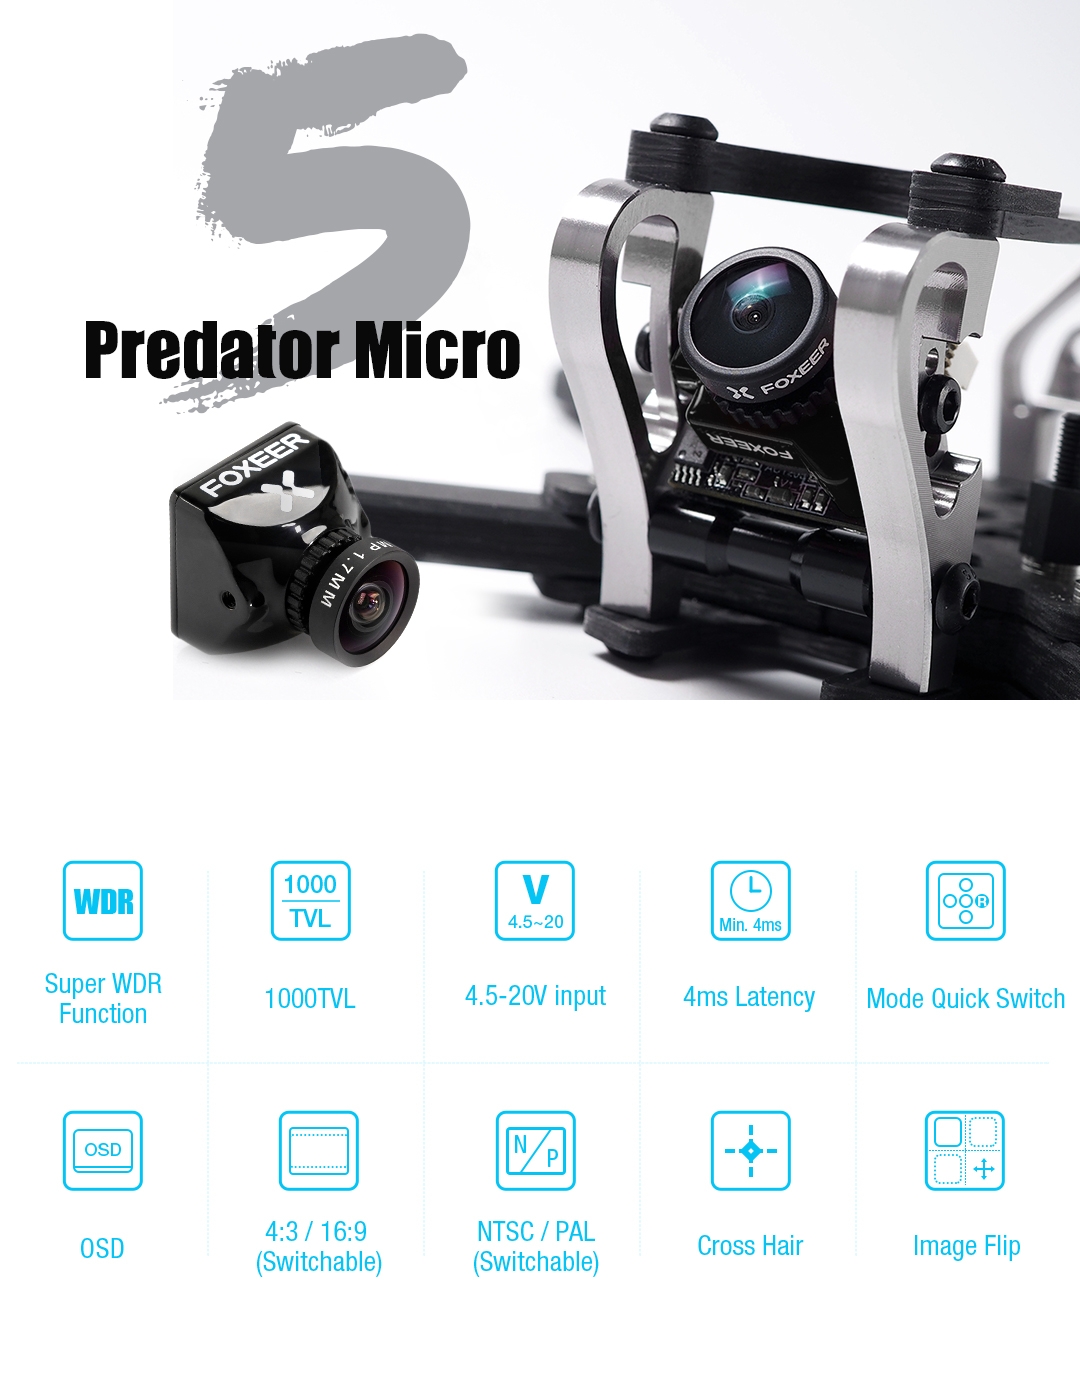 Foxeer Micro Predator 5 Racing FPV Camera 1000TVL 1.7mm M8 Lens 4ms Latency Super WDR